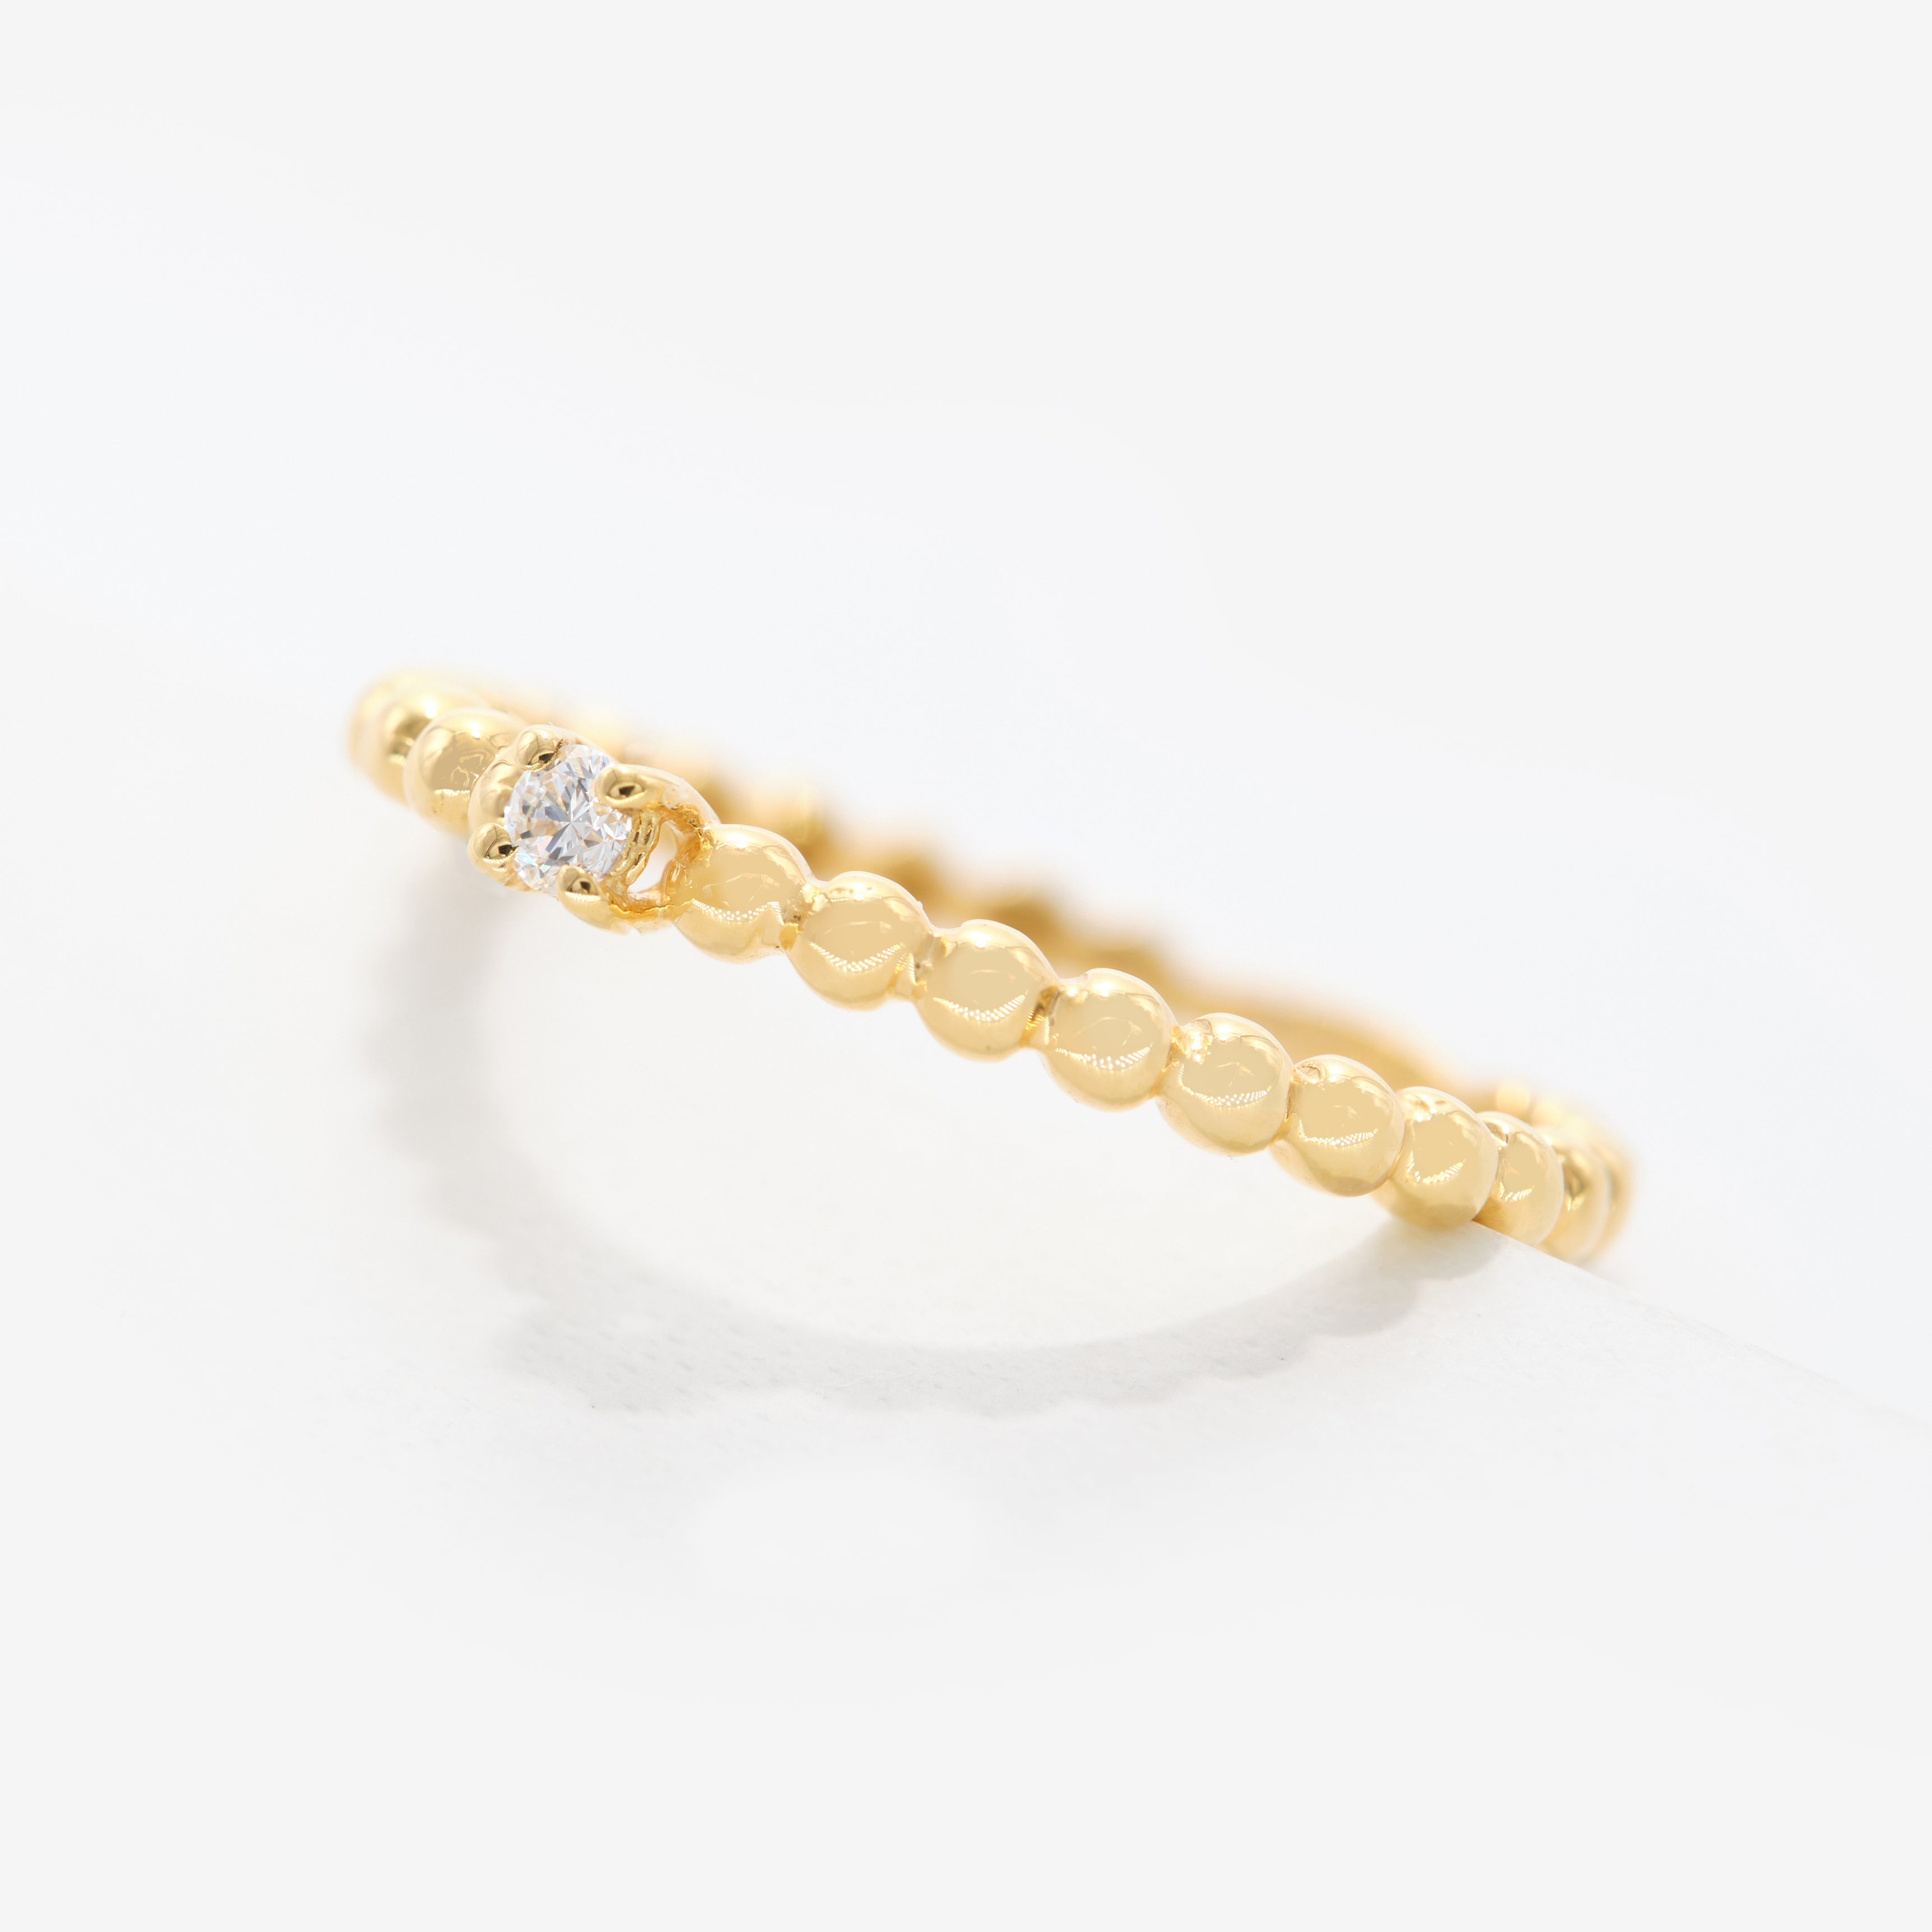 Kyra yellow gold and diamond ring